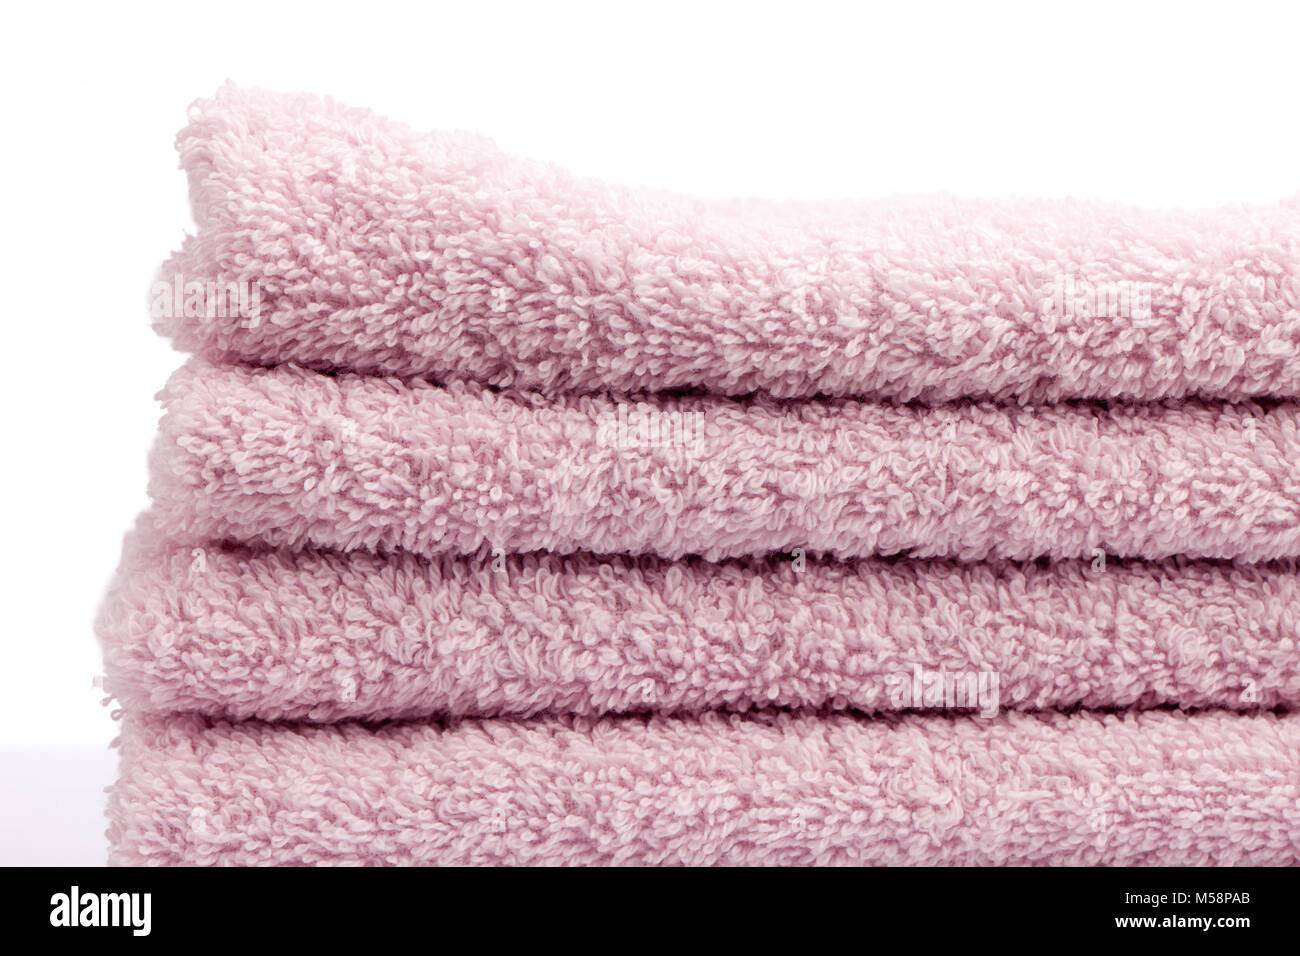 https://c8.alamy.com/comp/M58PAB/pile-of-fluffy-pink-towels-M58PAB.jpg